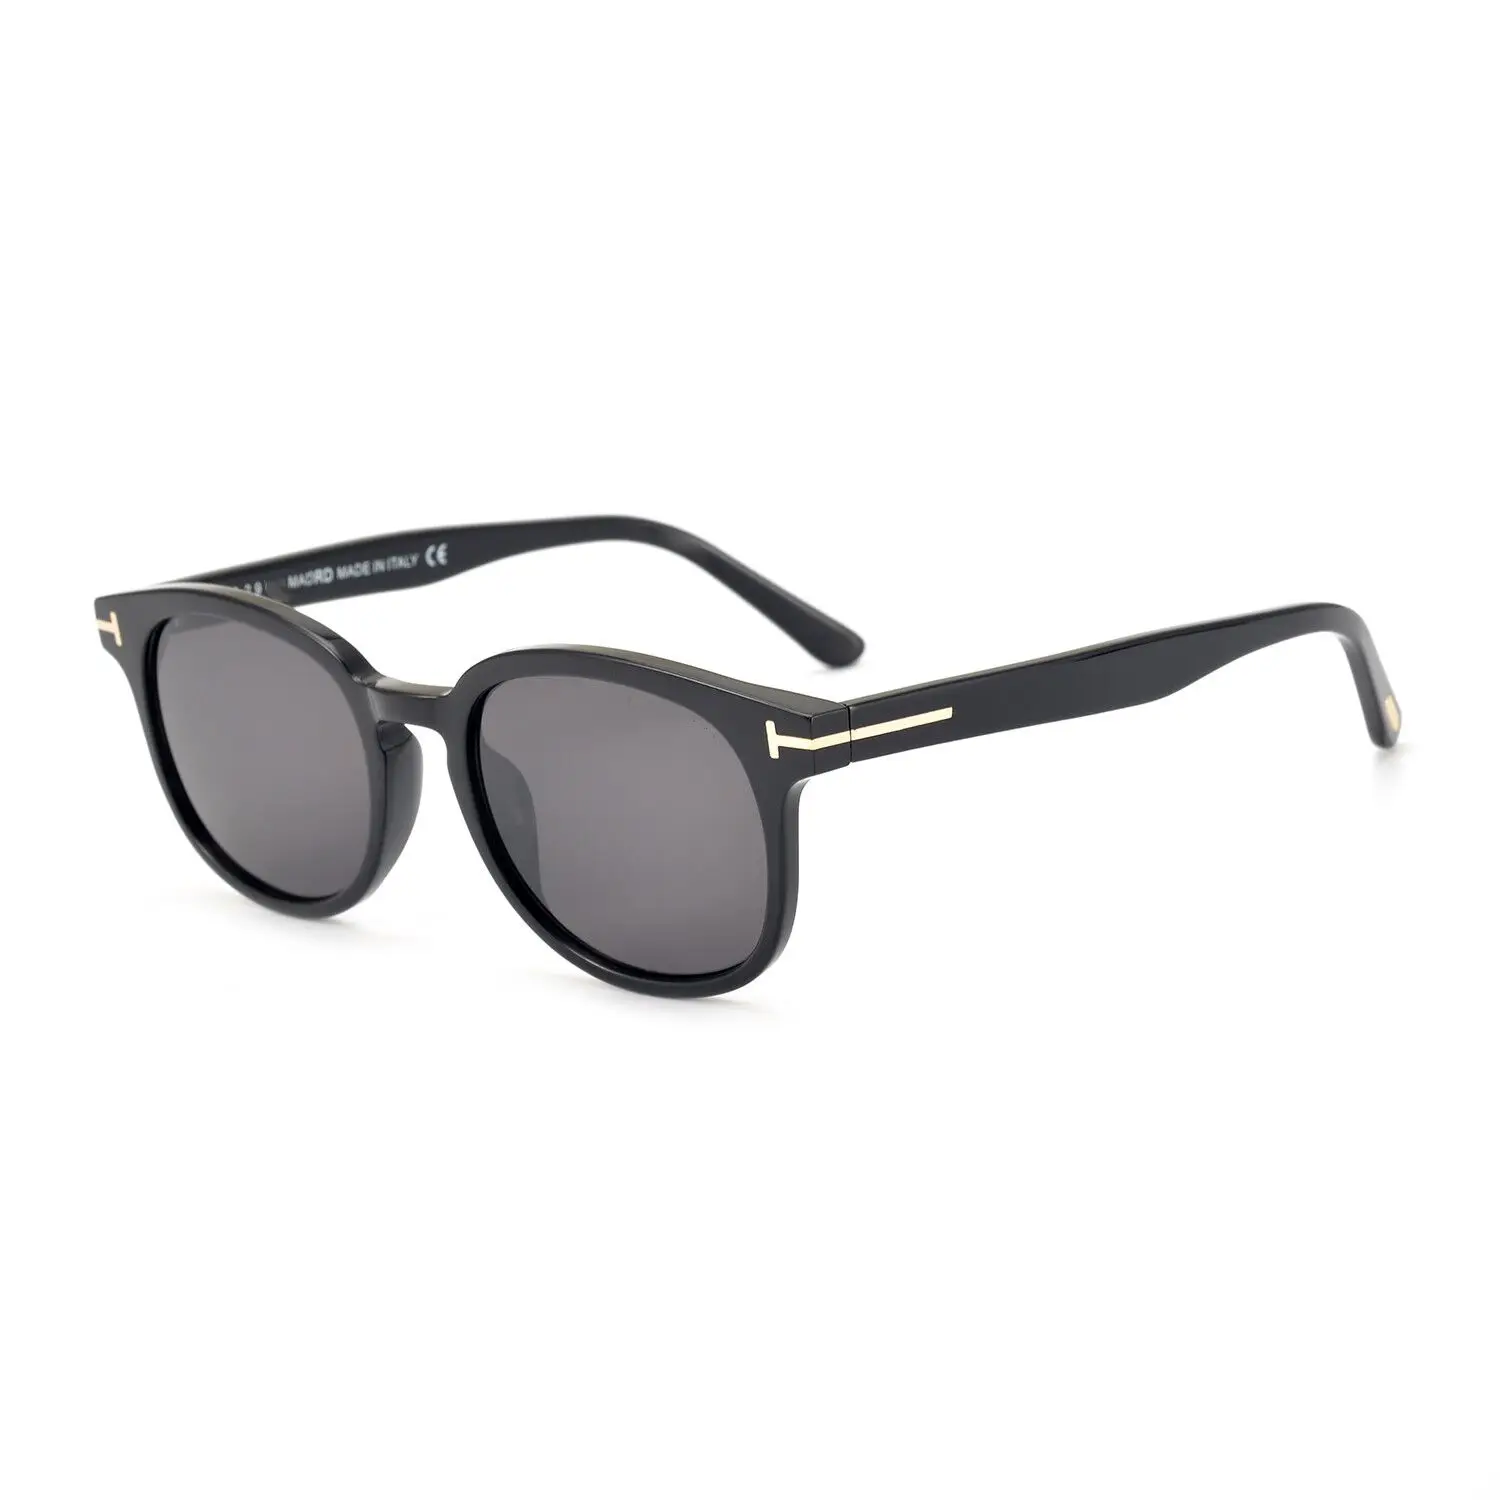 

Men's Outdoor Polarized Sunglasses Brand TF0399 Women's Round Acetate Beach Tourism Driving Sunglasses High Quality